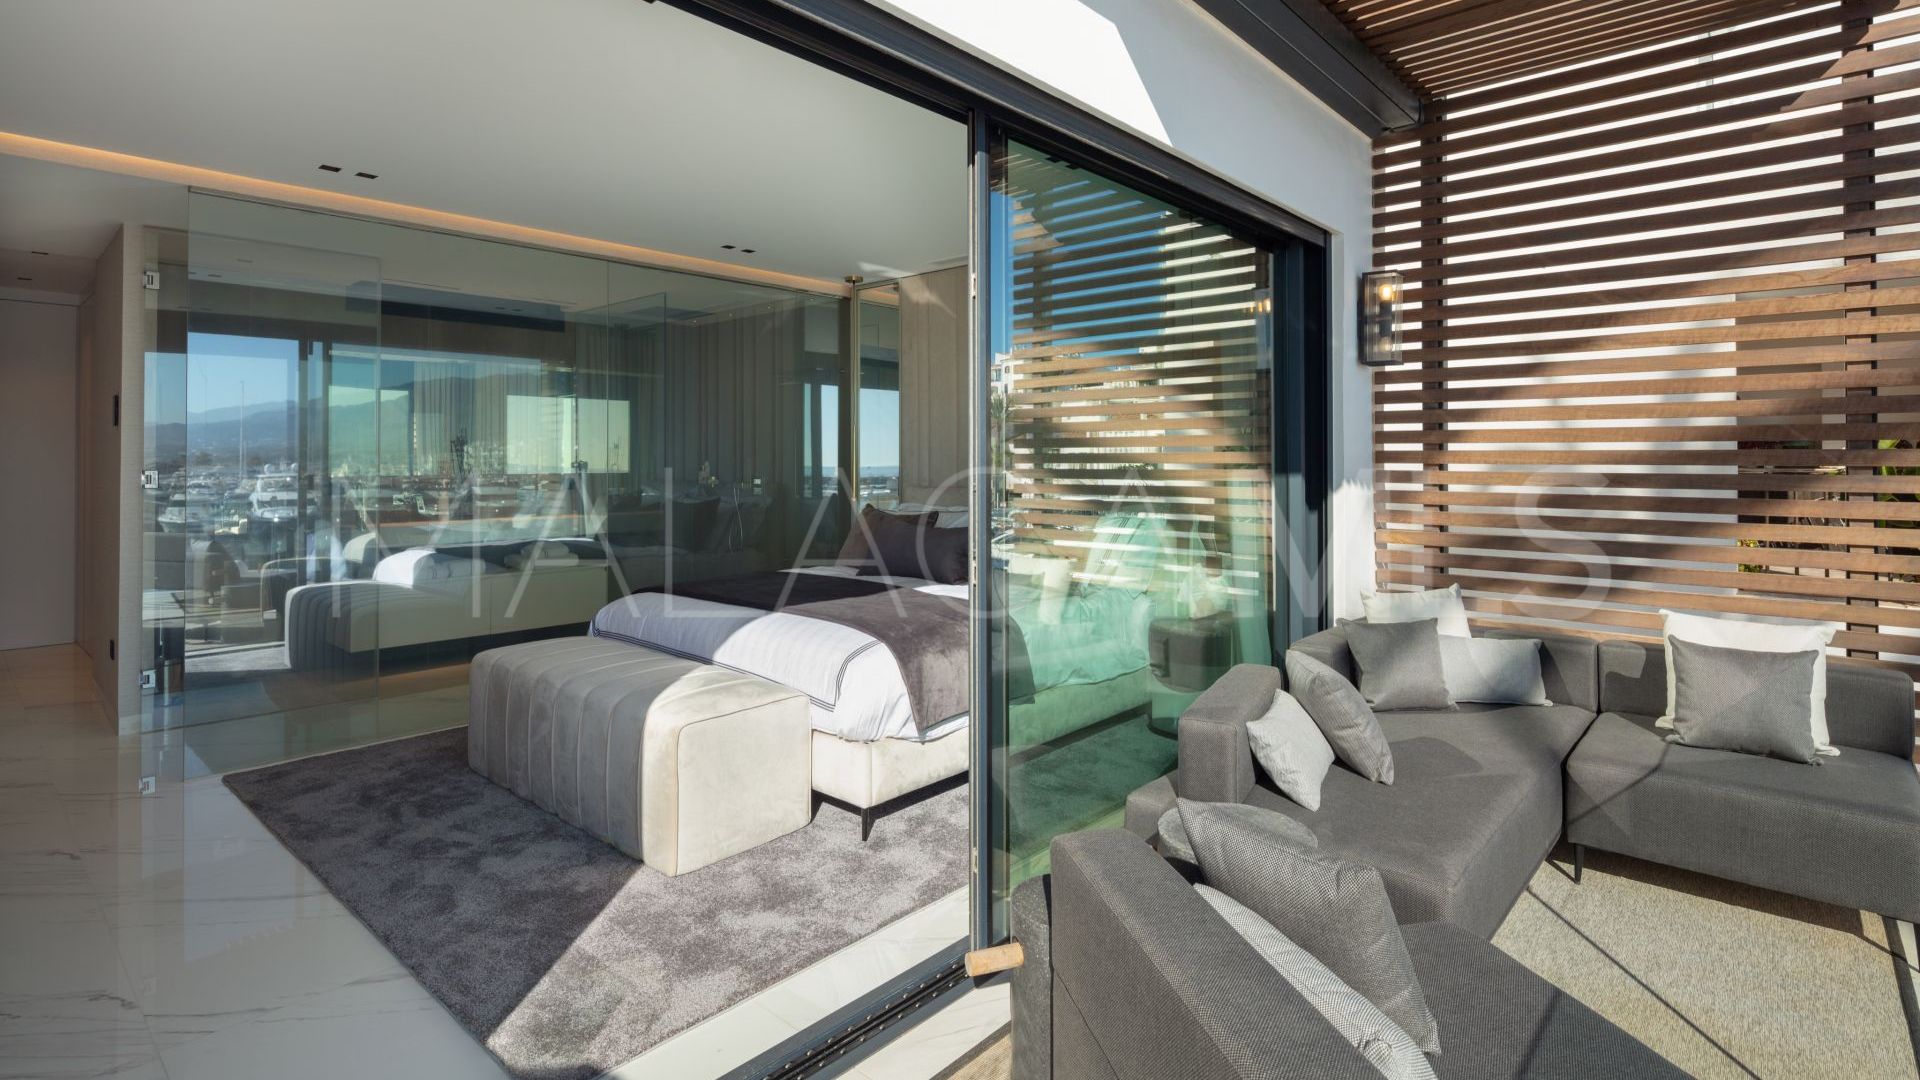 Atico for sale with 3 bedrooms in Marbella - Puerto Banus